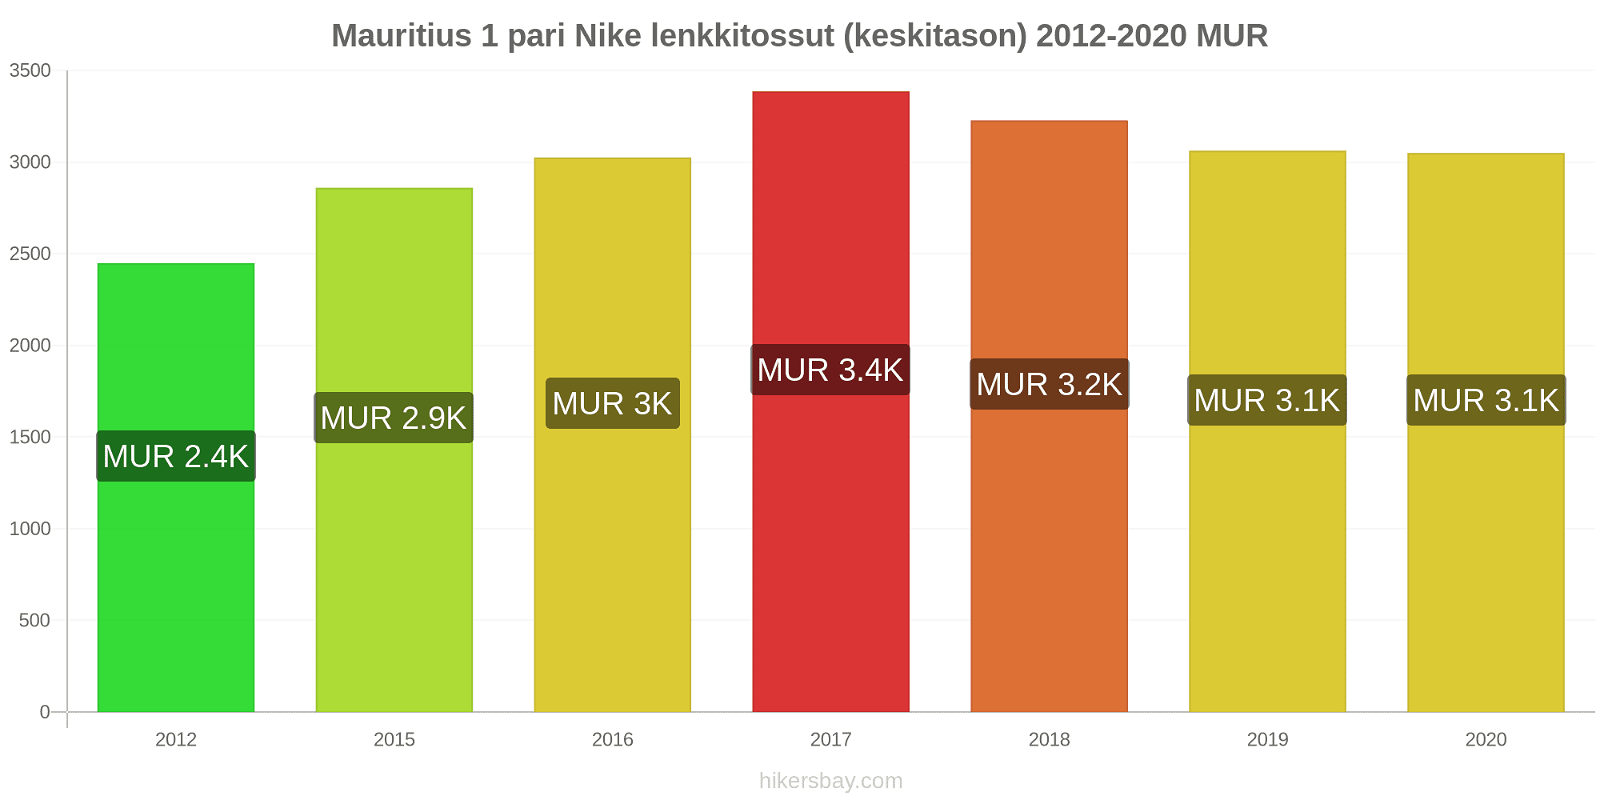 Mauritius hintojen muutokset 1 pari Nike lenkkitossut (keskitason) hikersbay.com